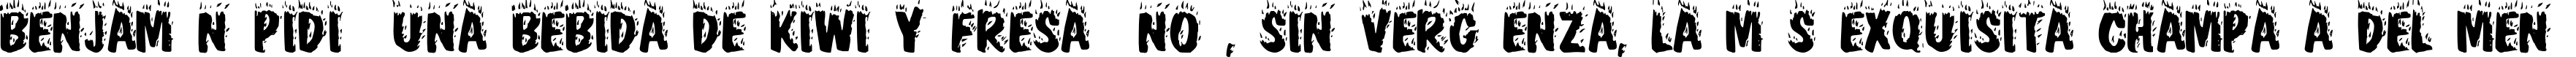 Пример написания шрифтом Blaze текста на испанском